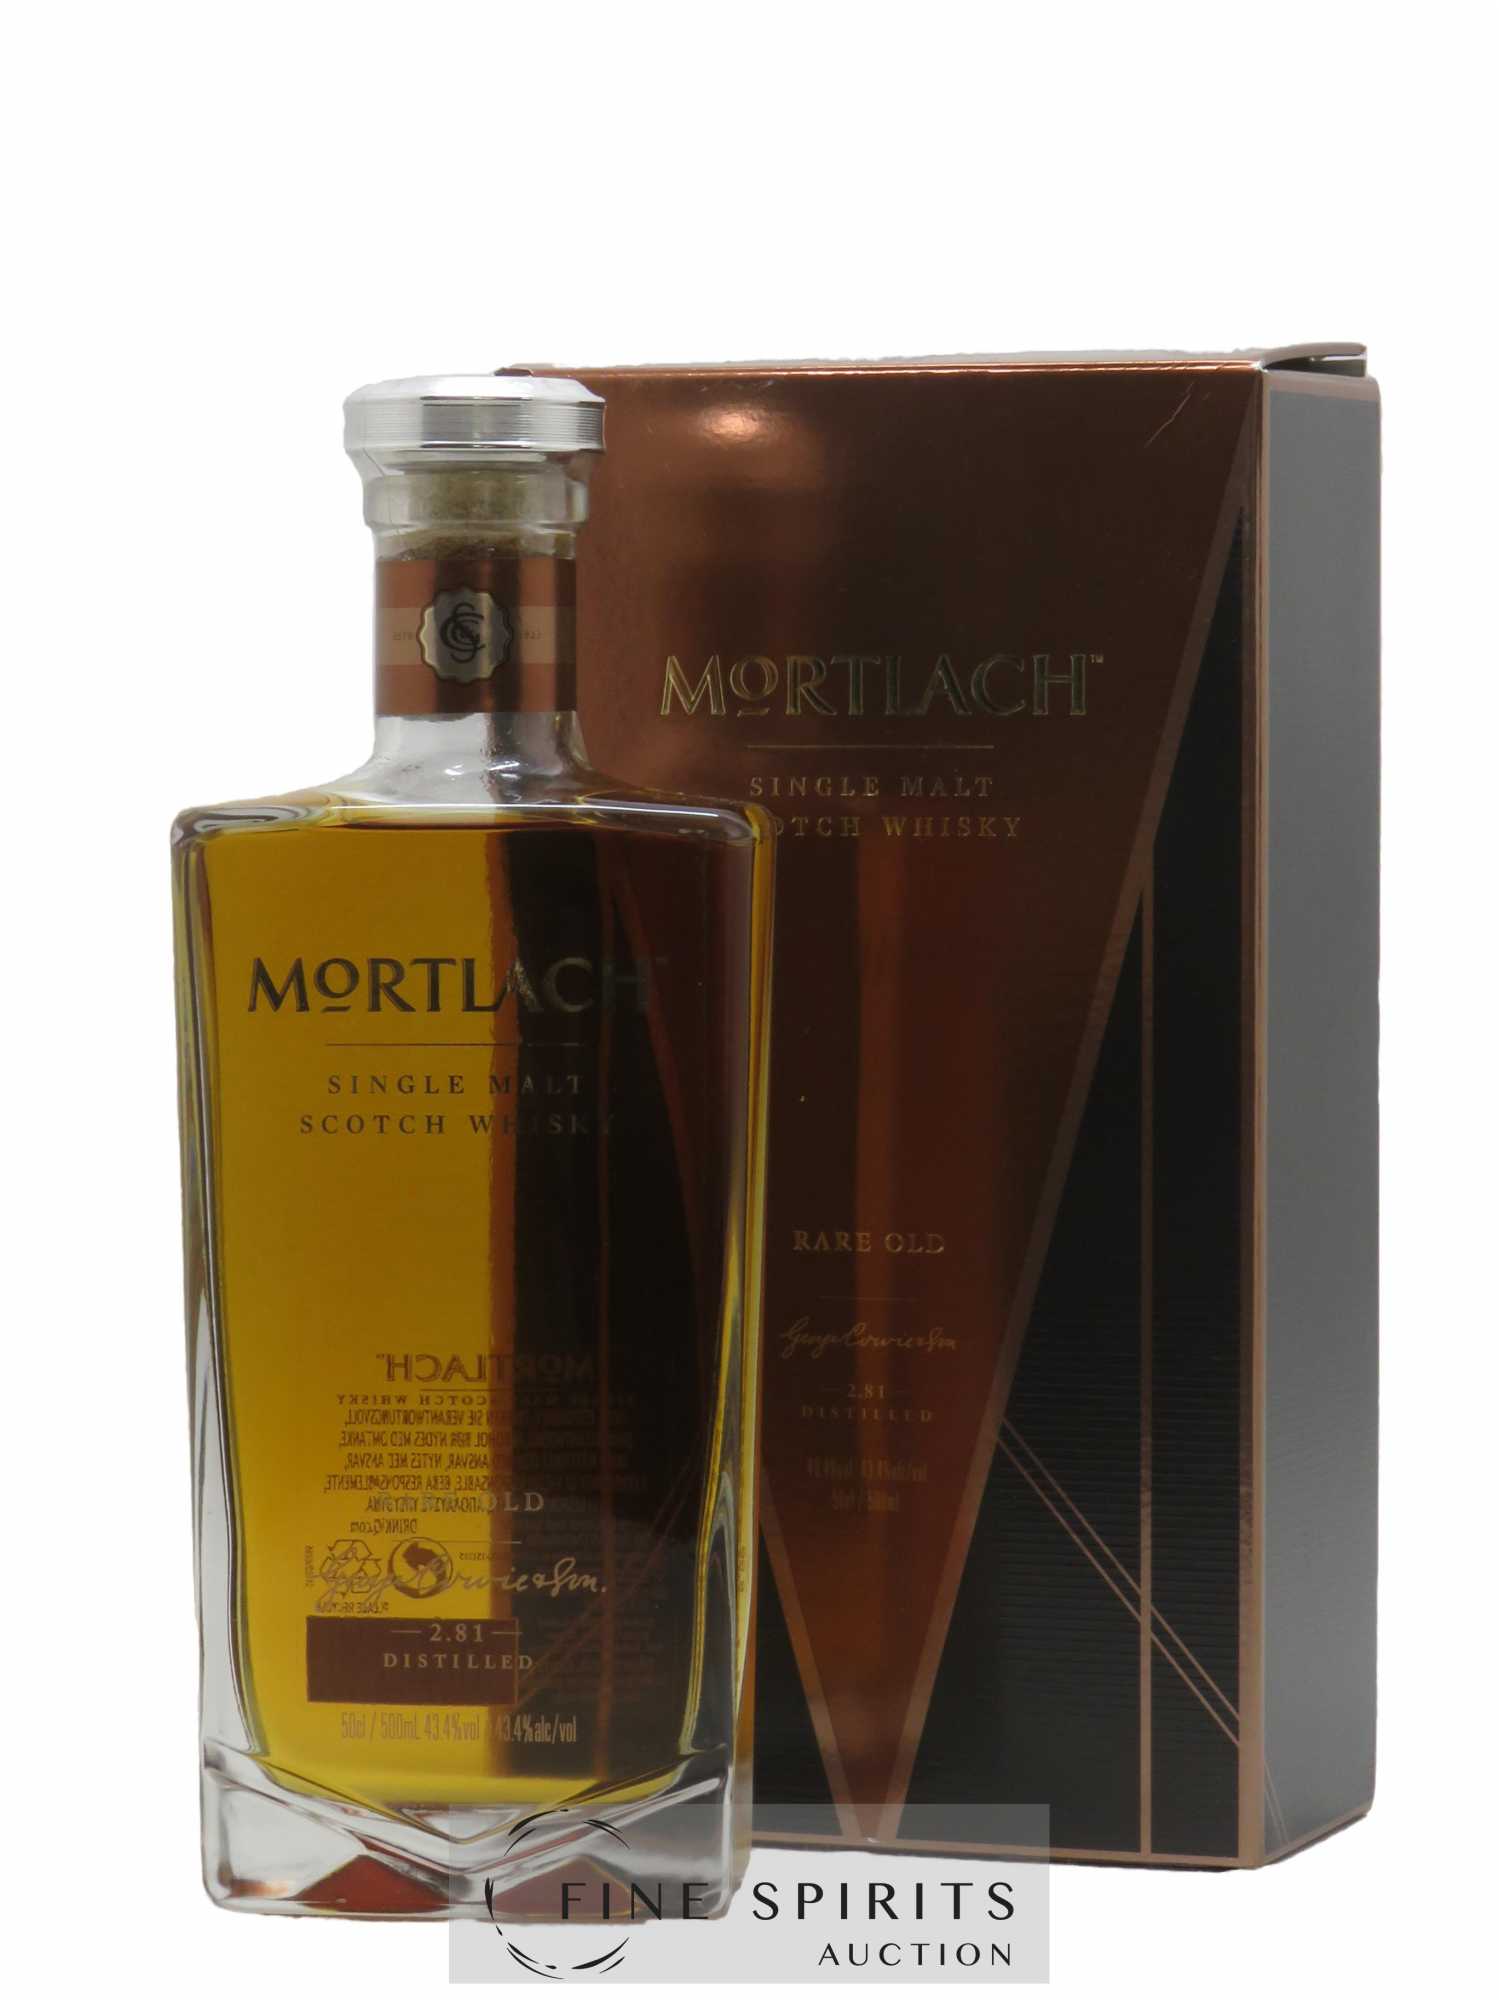 Mortlach Of. Rare Old 2.81 Distilled Gordon & Macphail